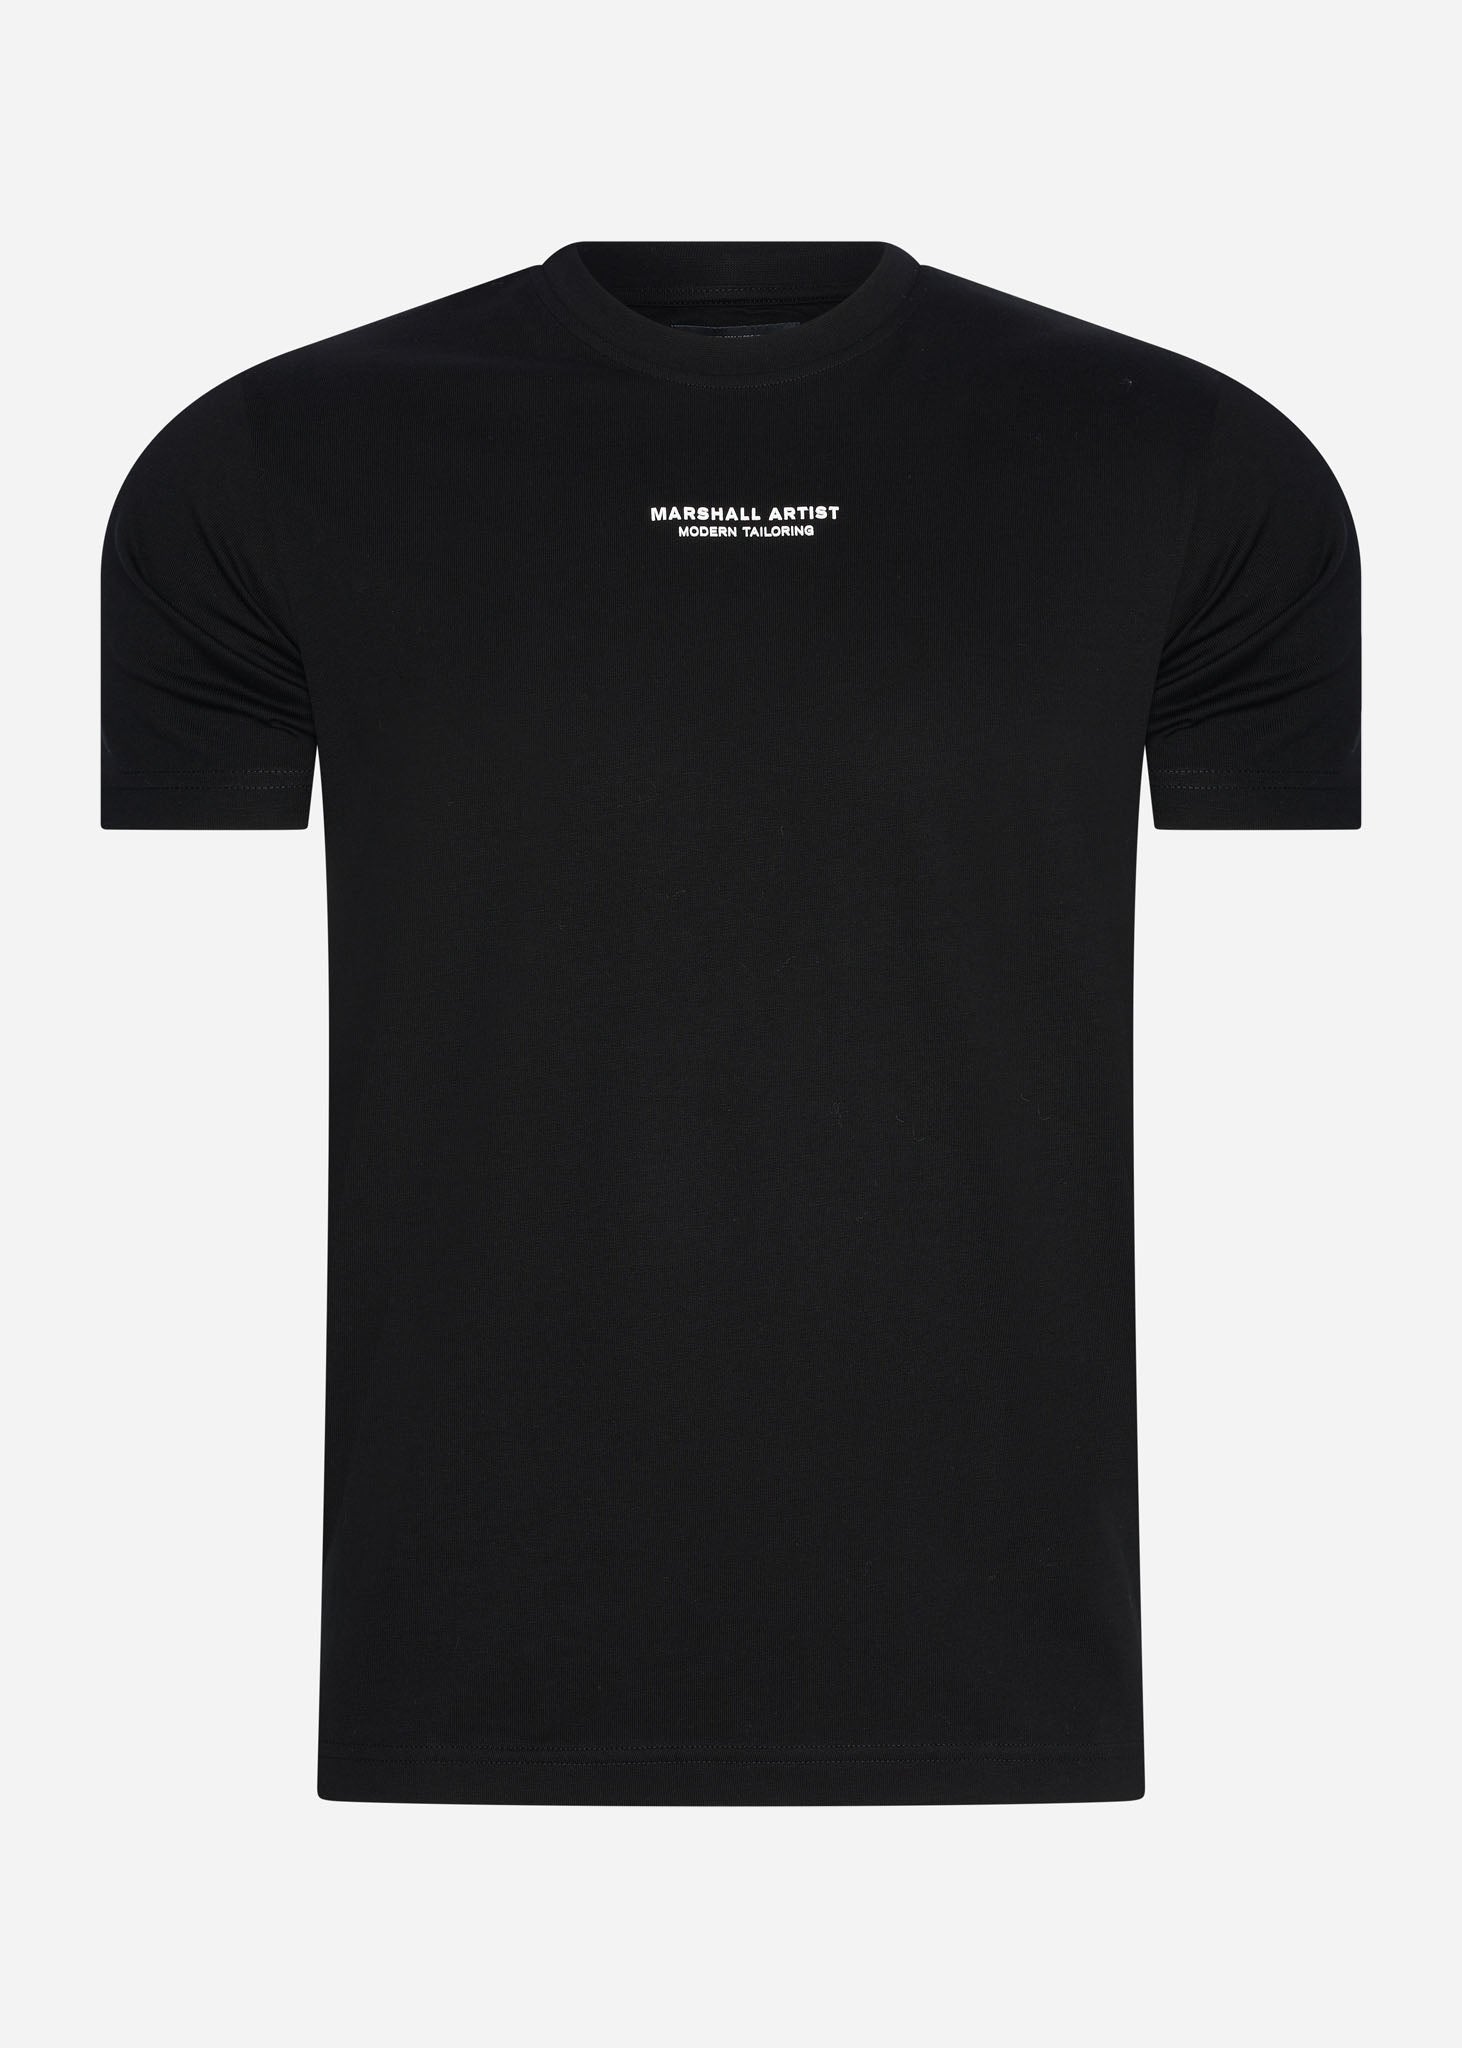 Marshall Artist t-shirt black